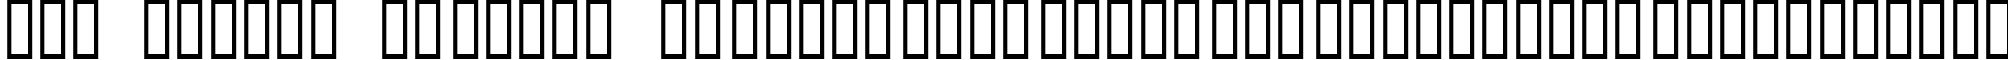 Пример написания шрифтом FreeHand MX Symbols текста на украинском